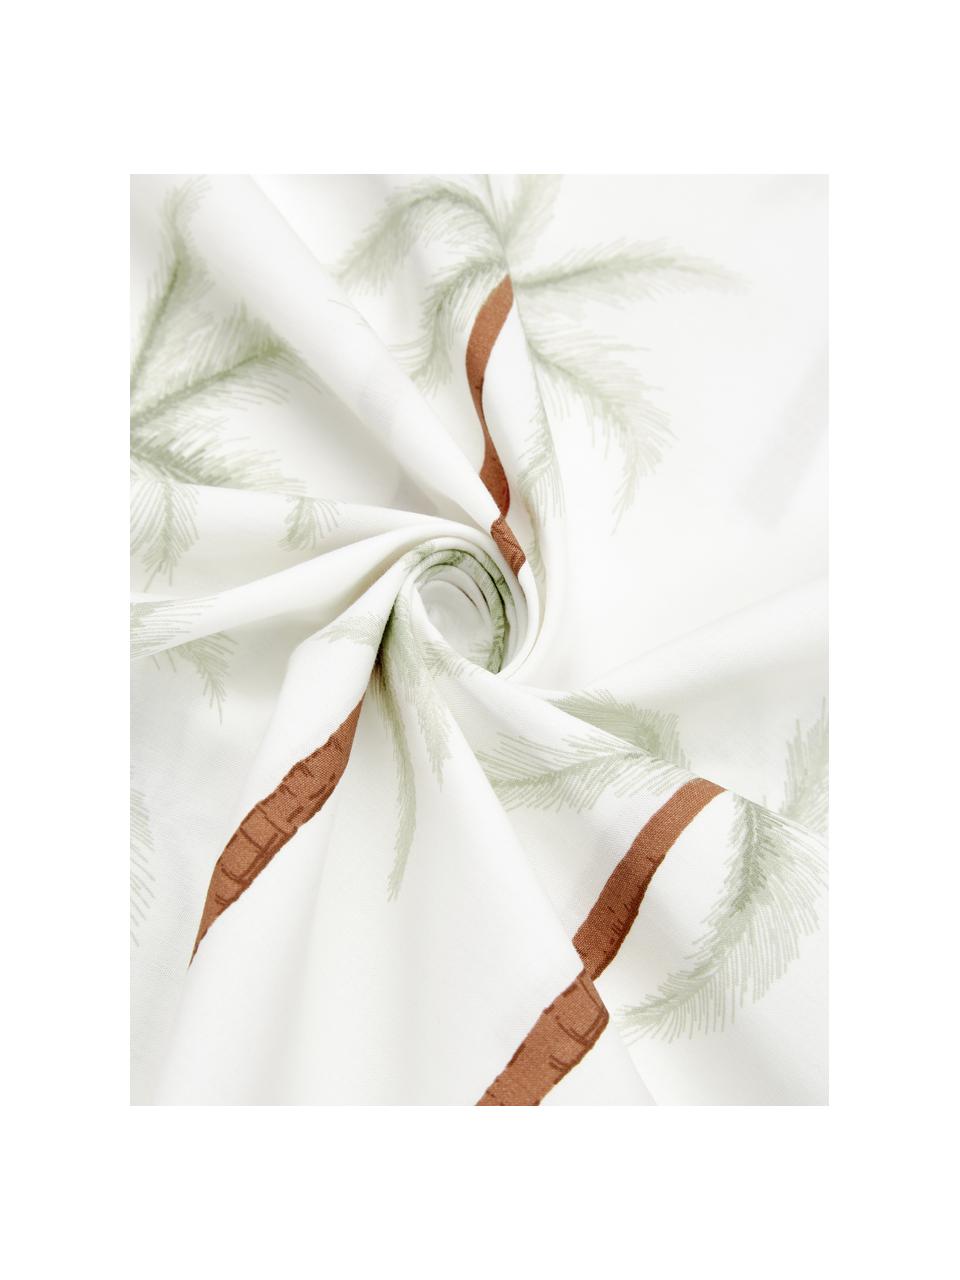 Taies d'oreiller en percale de coton bio Martha, 2 pièces, Blanc, vert, brun, larg. 40 x long. 80 cm